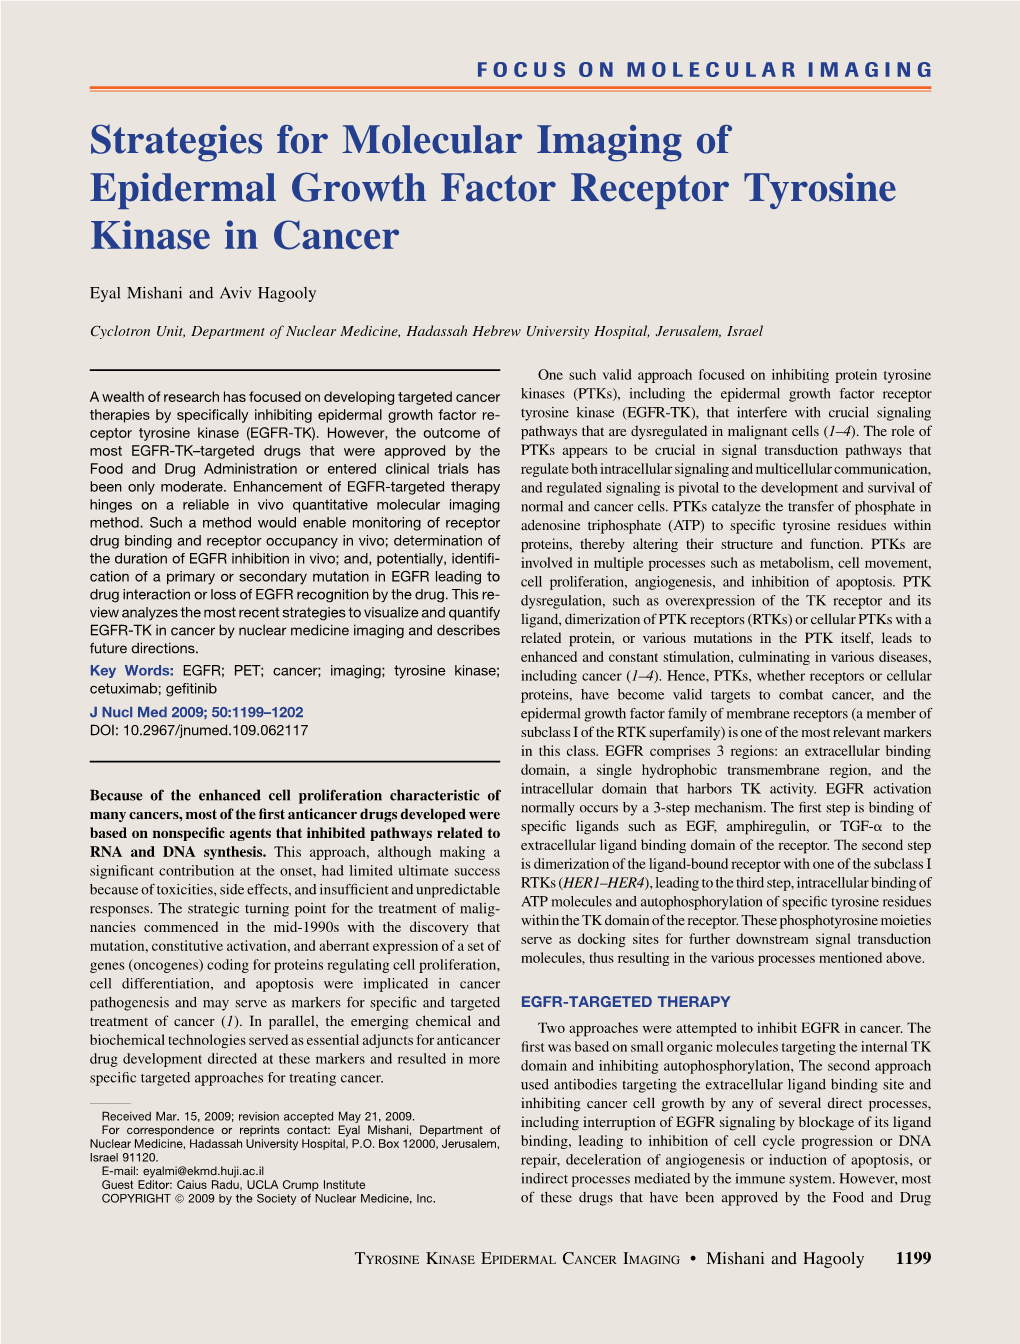 Strategies for Molecular Imaging of Epidermal Growth Factor Receptor Tyrosine Kinase in Cancer